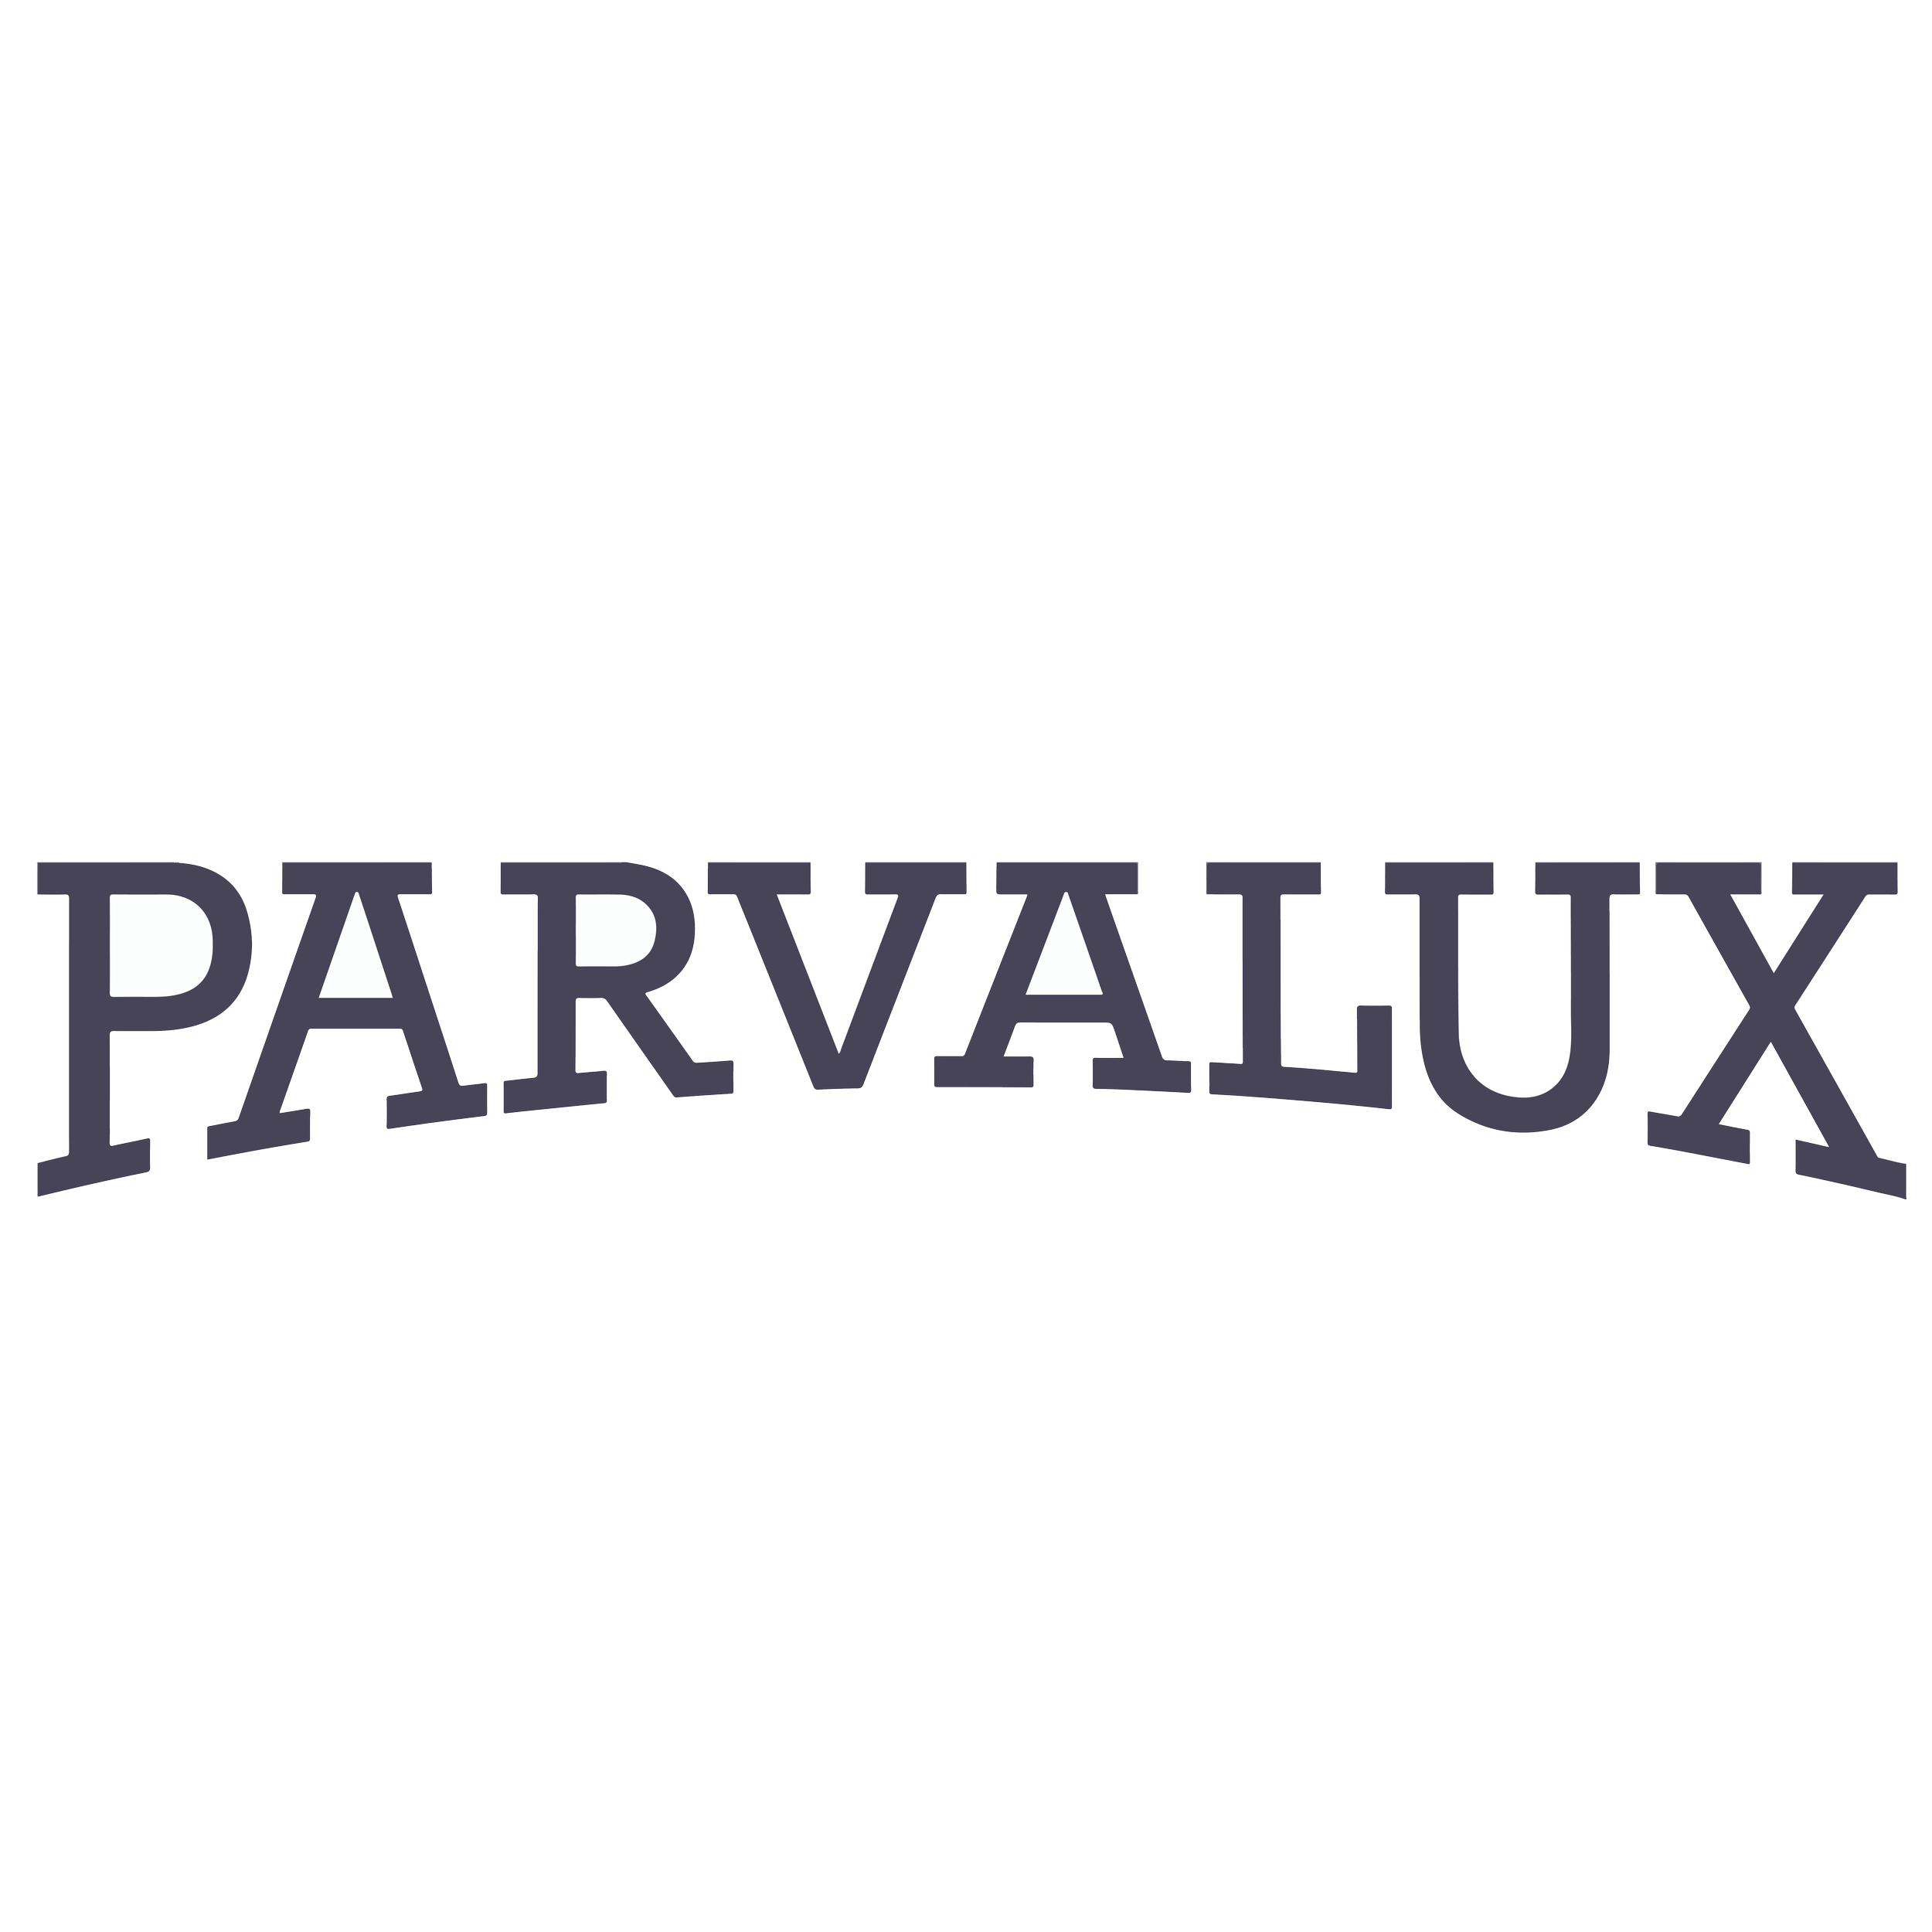 PARVALUX-01.png